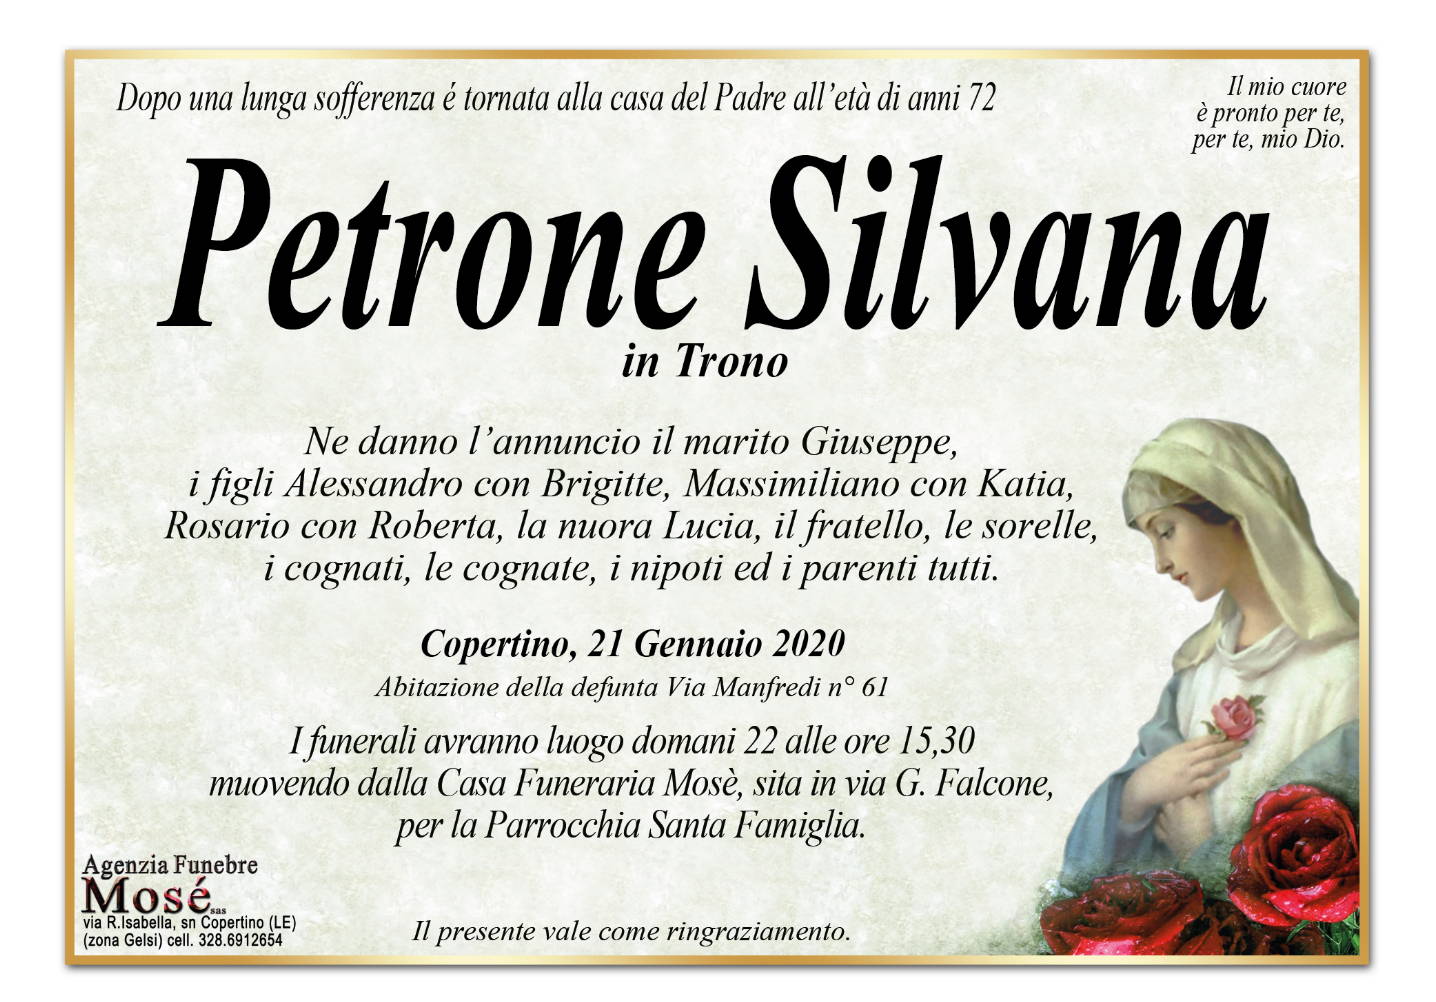 Silvana Petrone